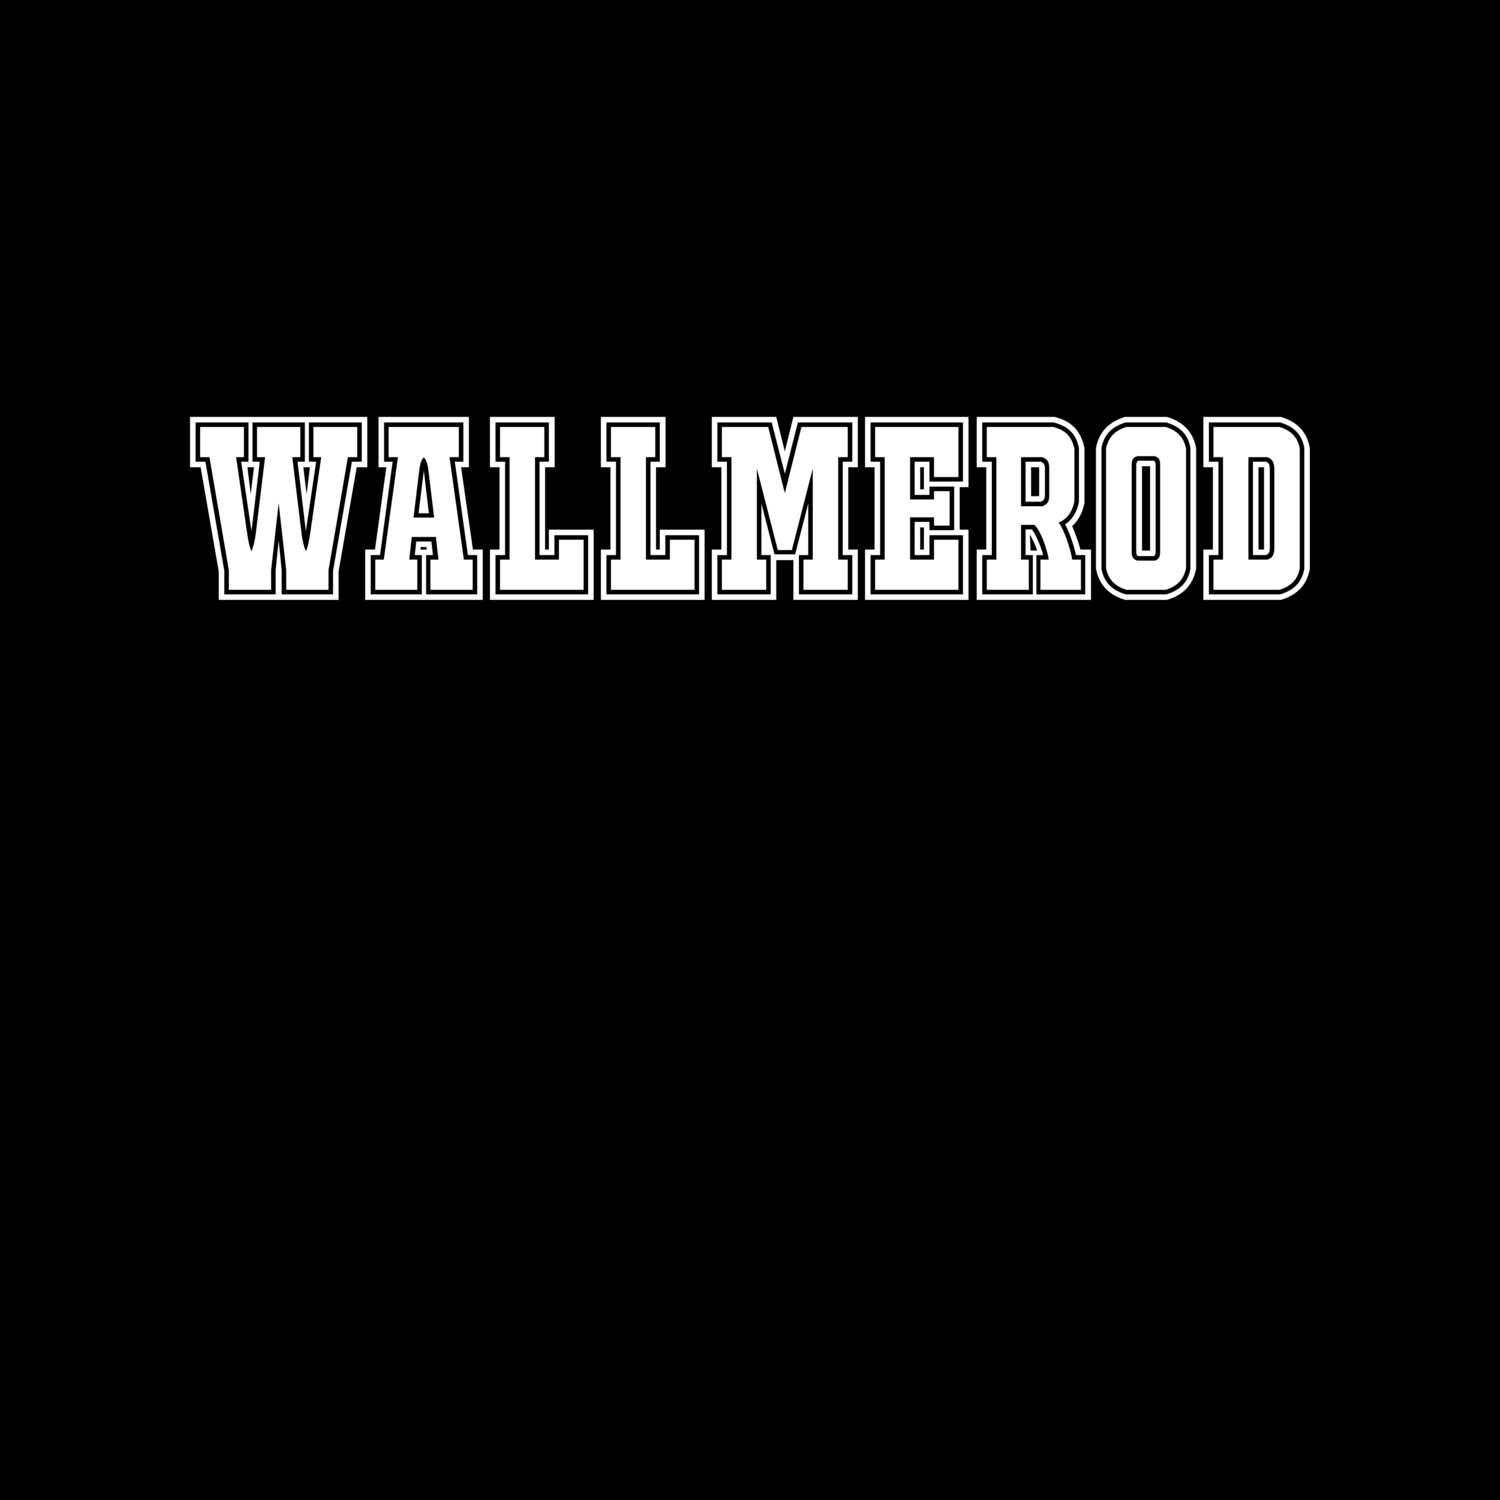 Wallmerod T-Shirt »Classic«